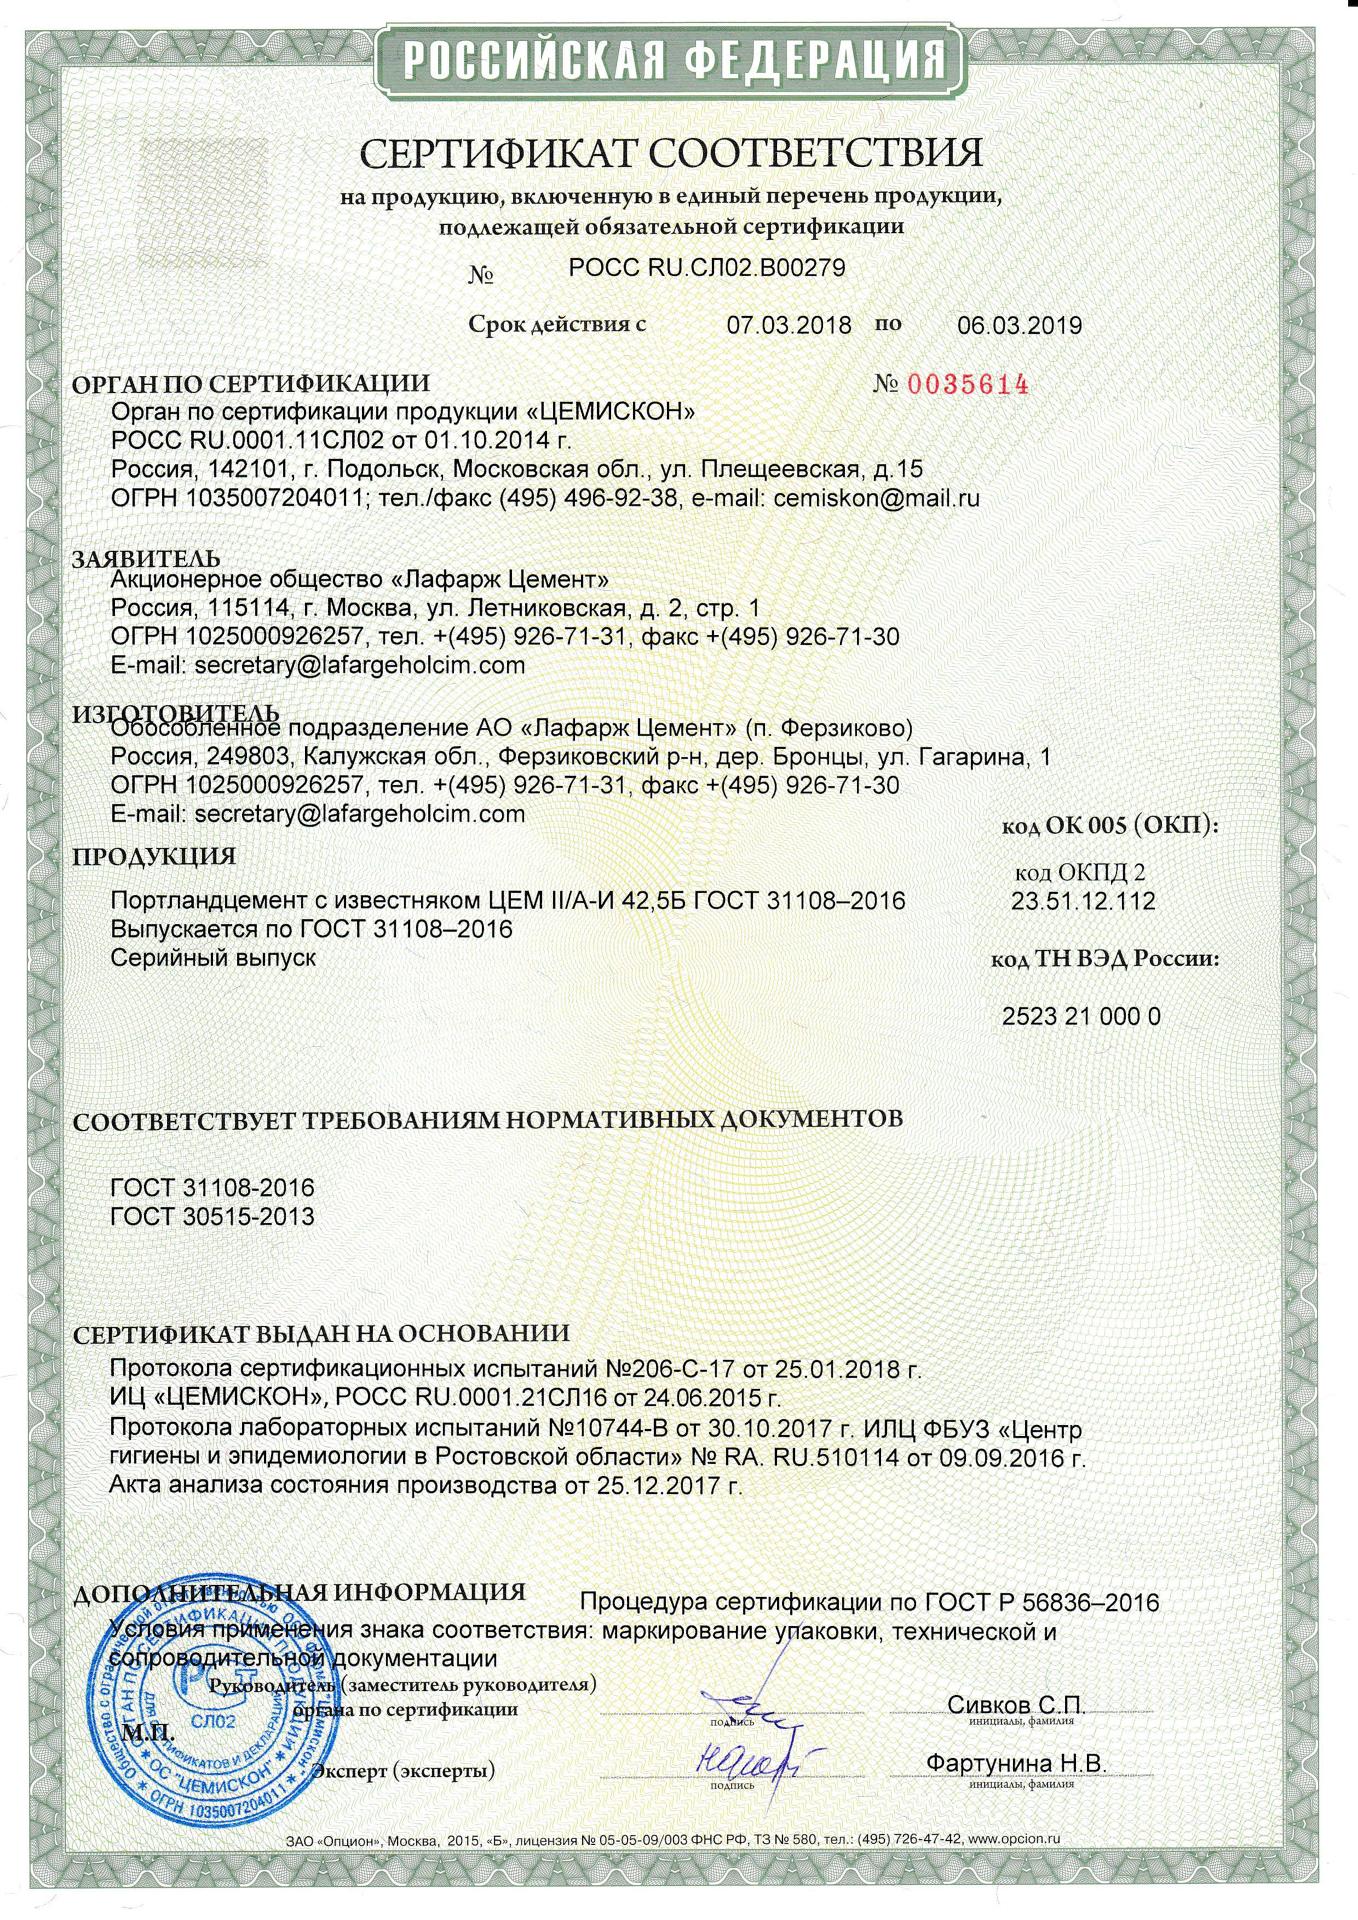 sertifikat-sootvetstviya-foto-1